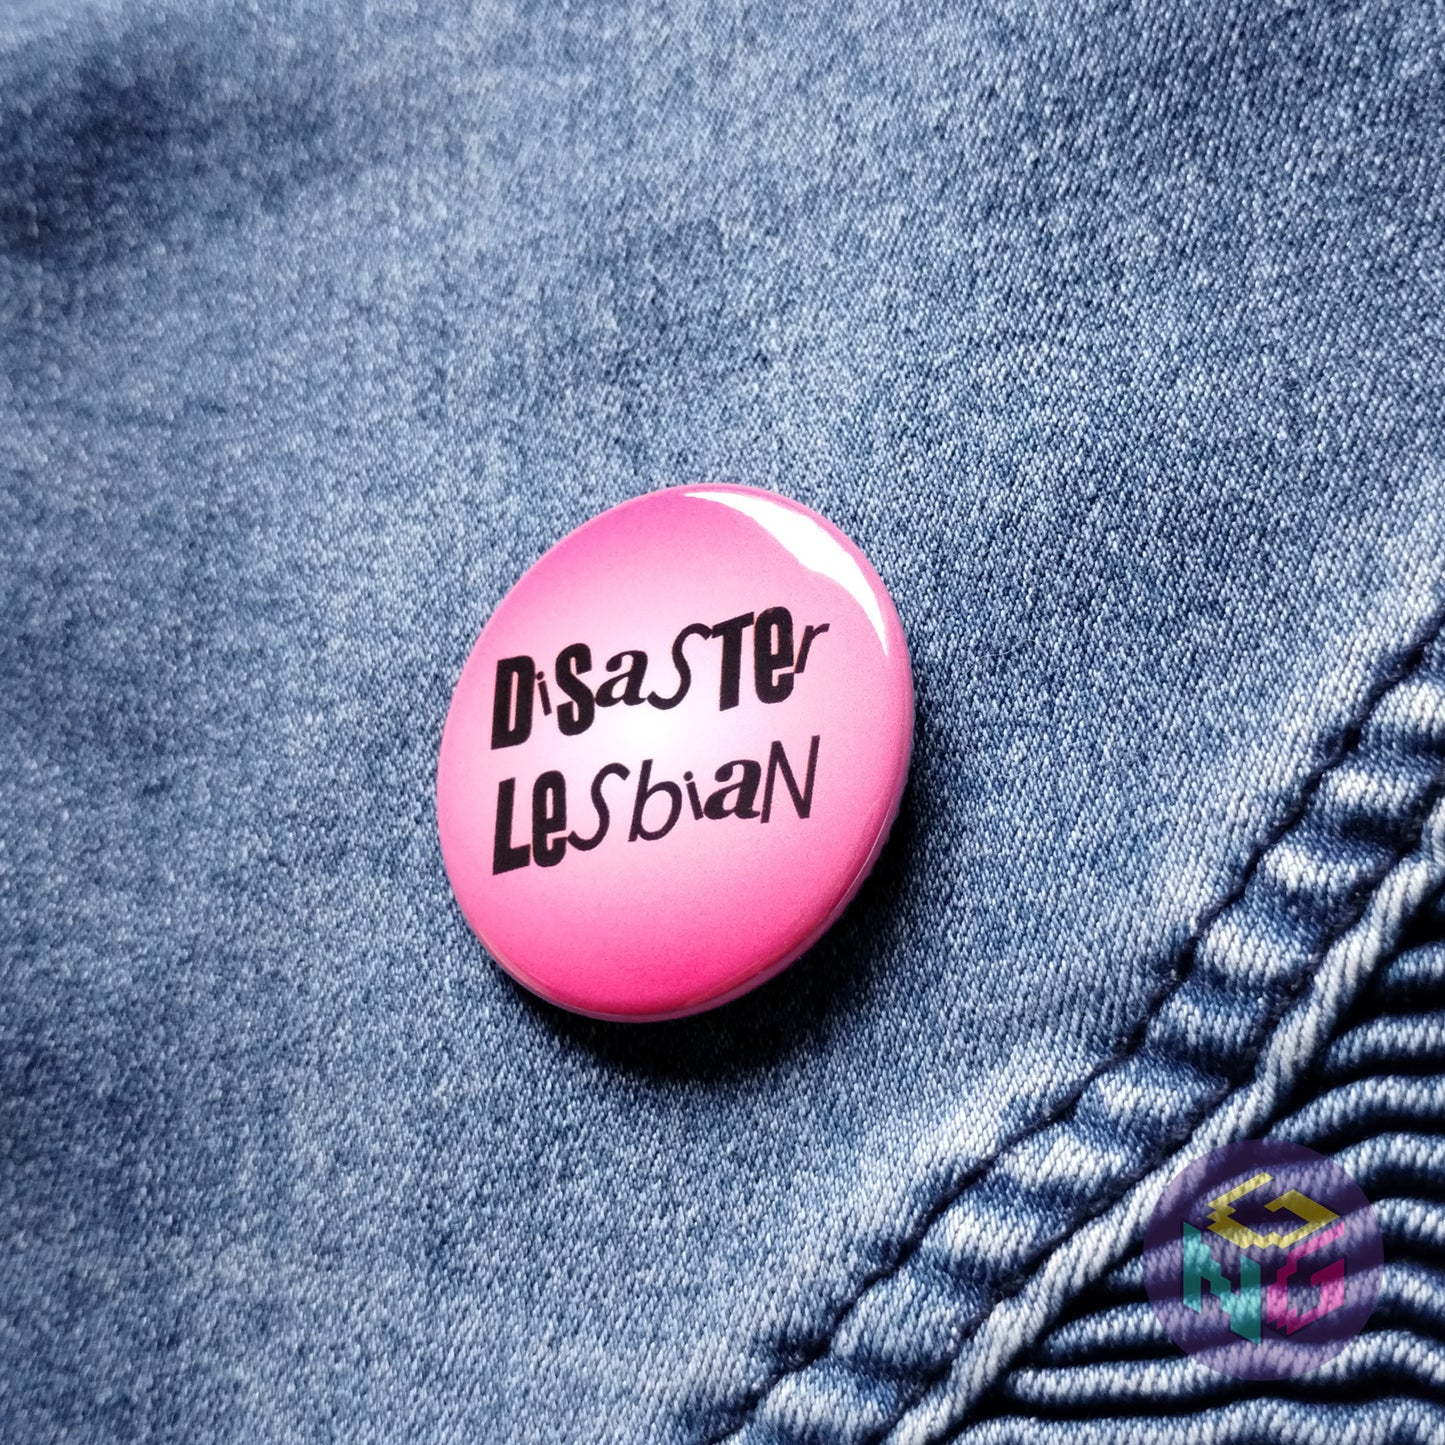 pink disaster lesbian pin on blue denim background